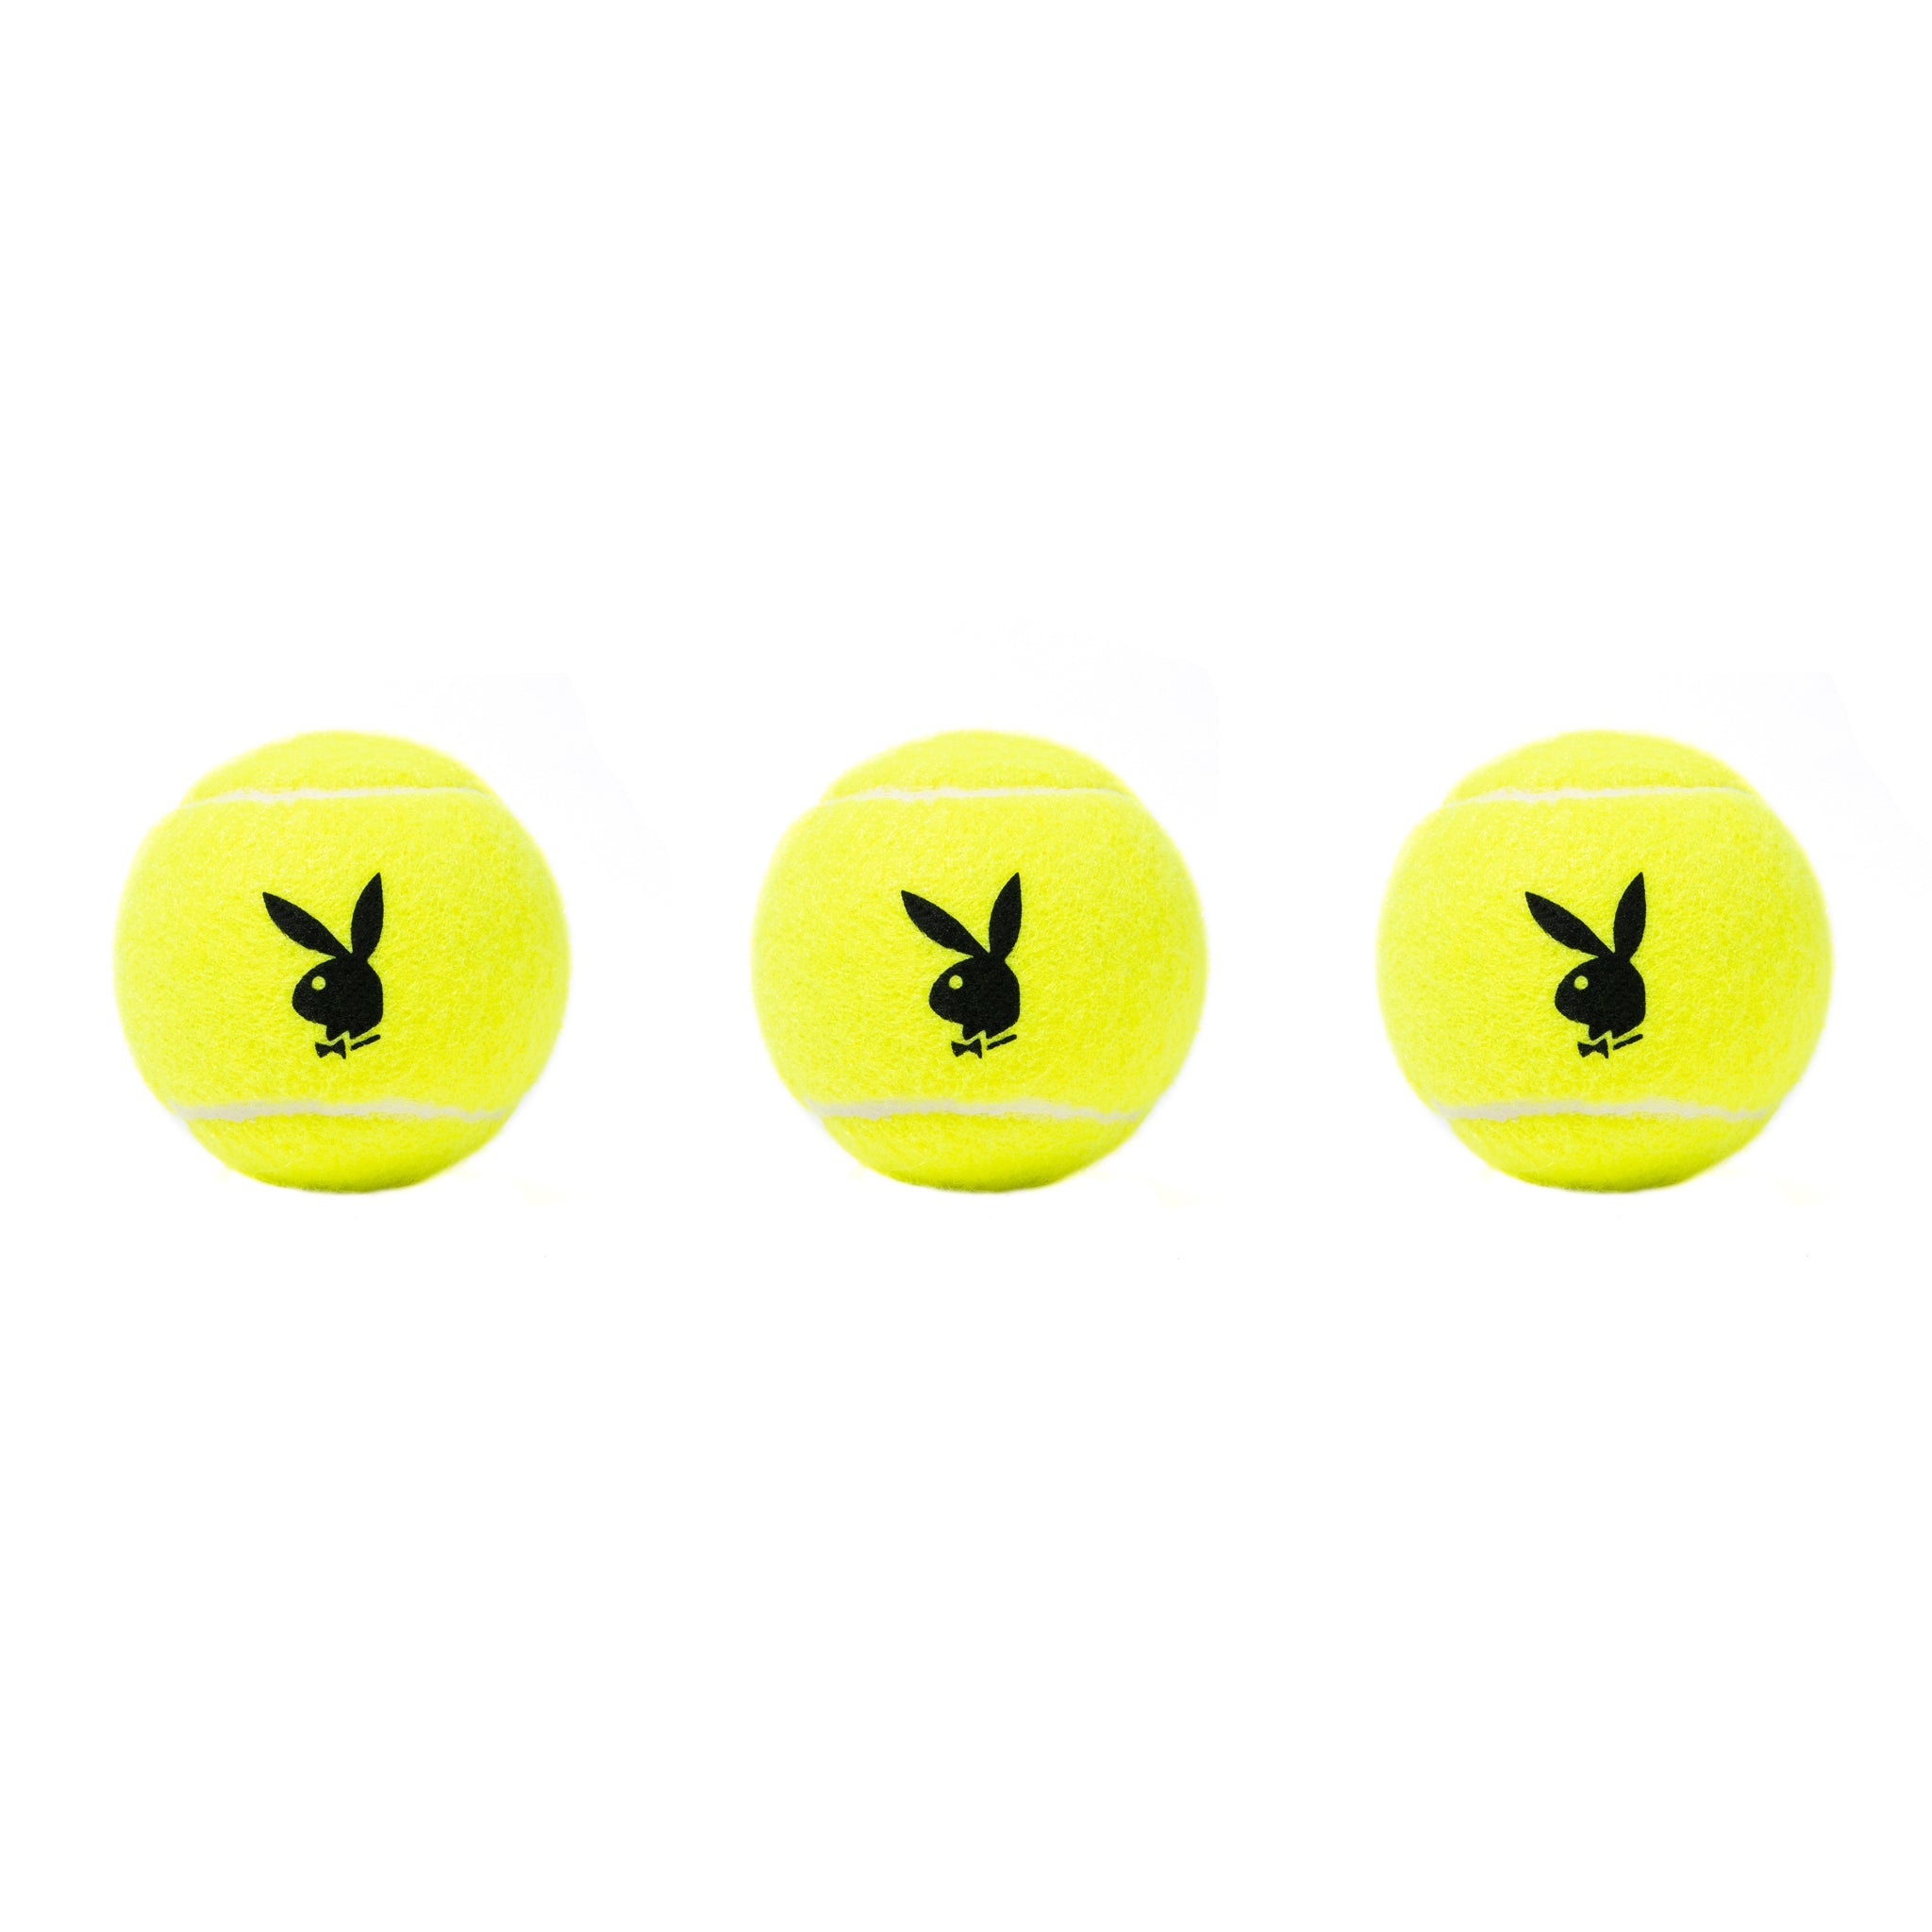 Rabbit Head Tennis Balls